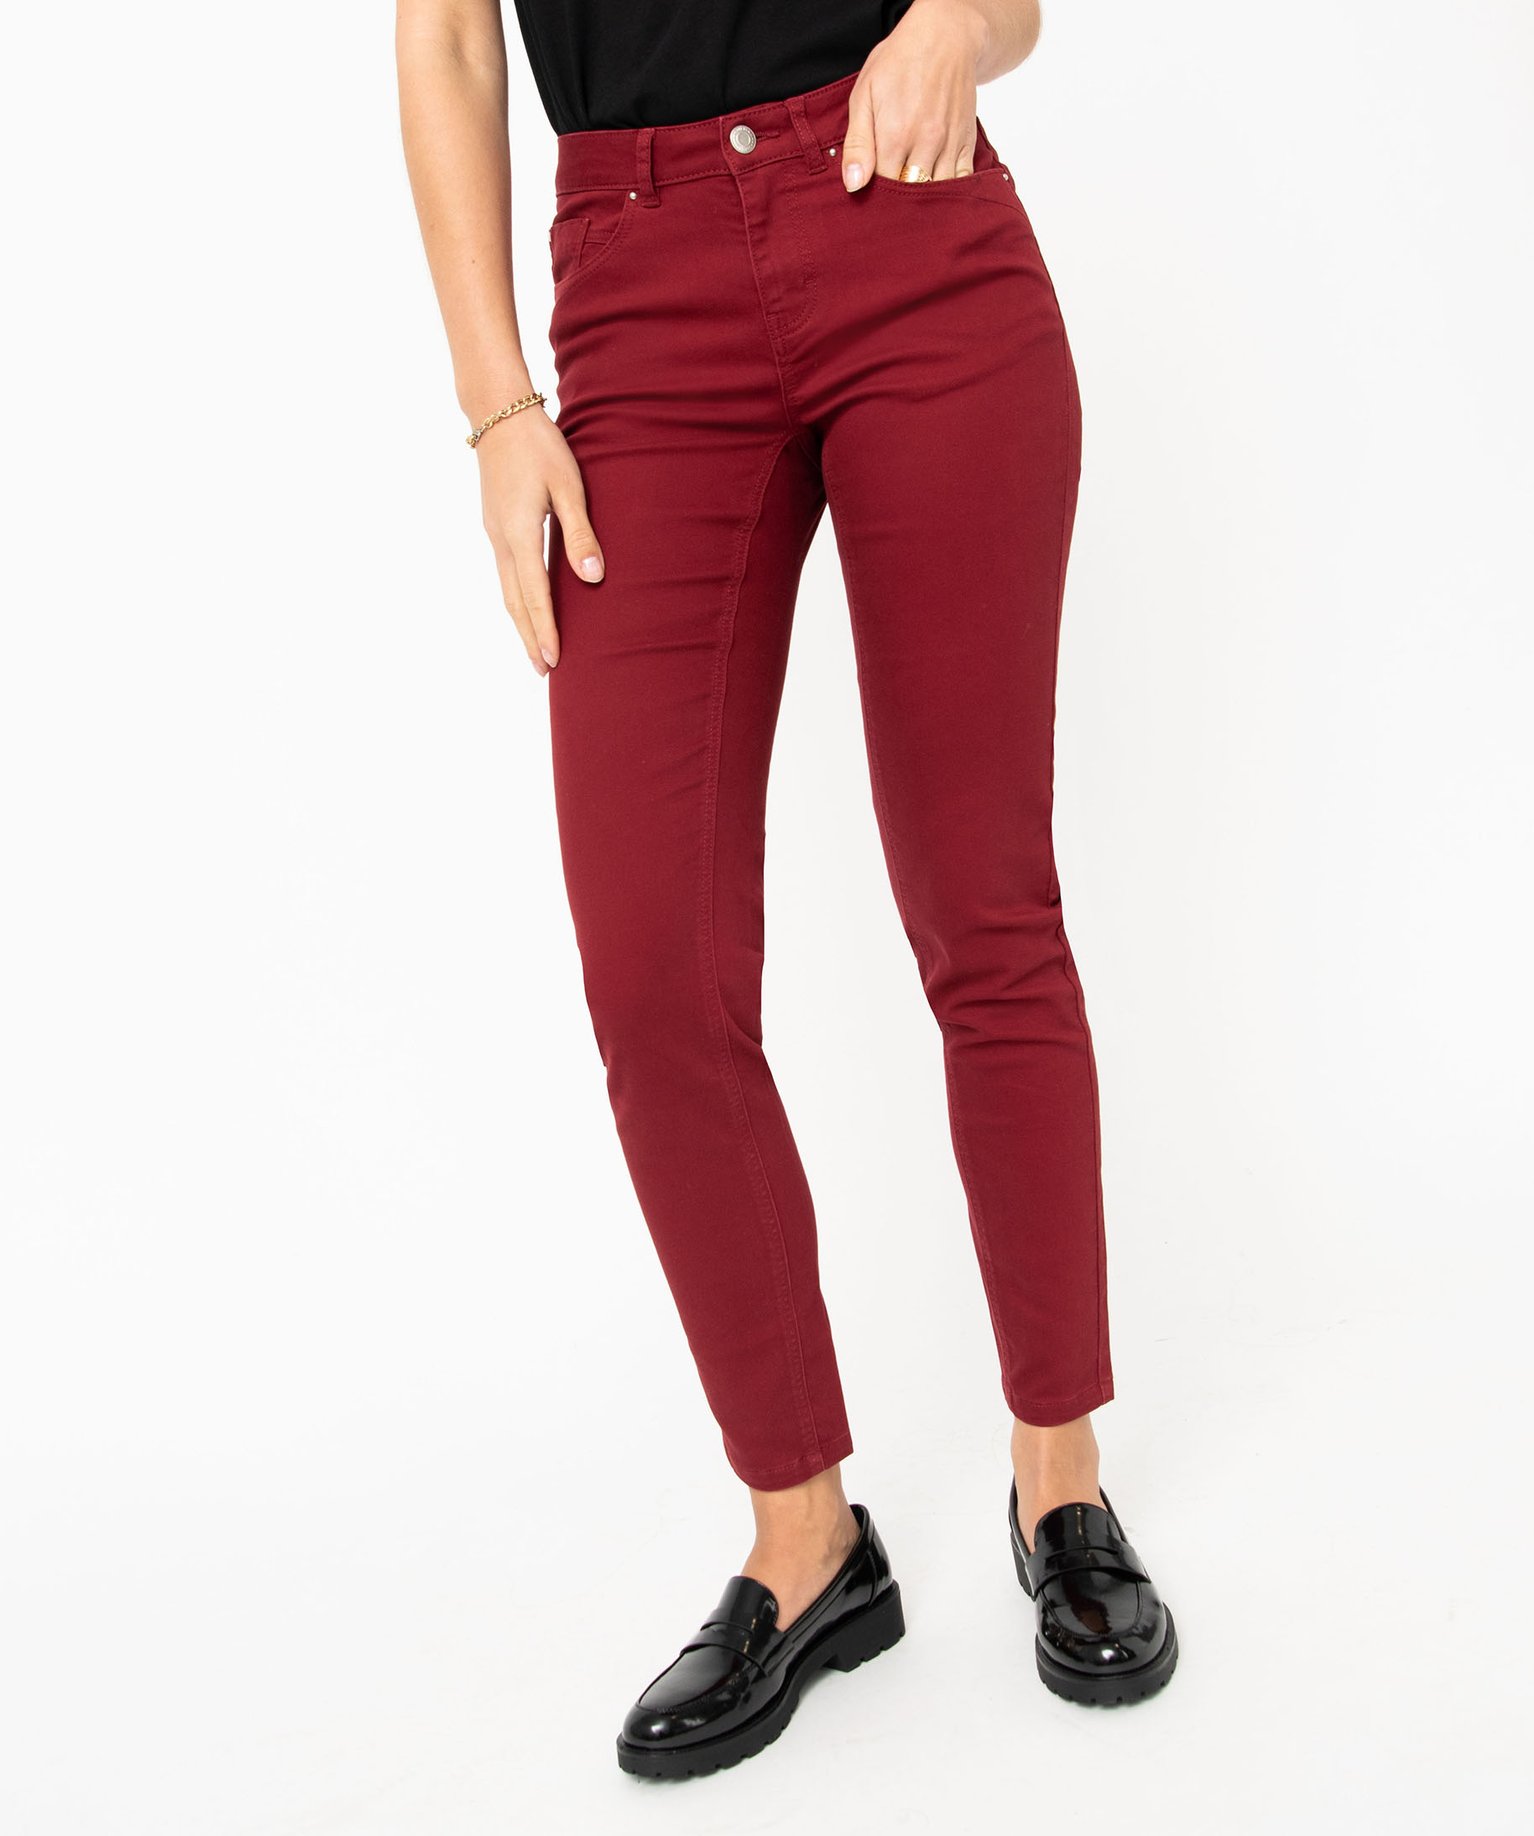 pantalon femme coupe slim taille normale rouge pantalons